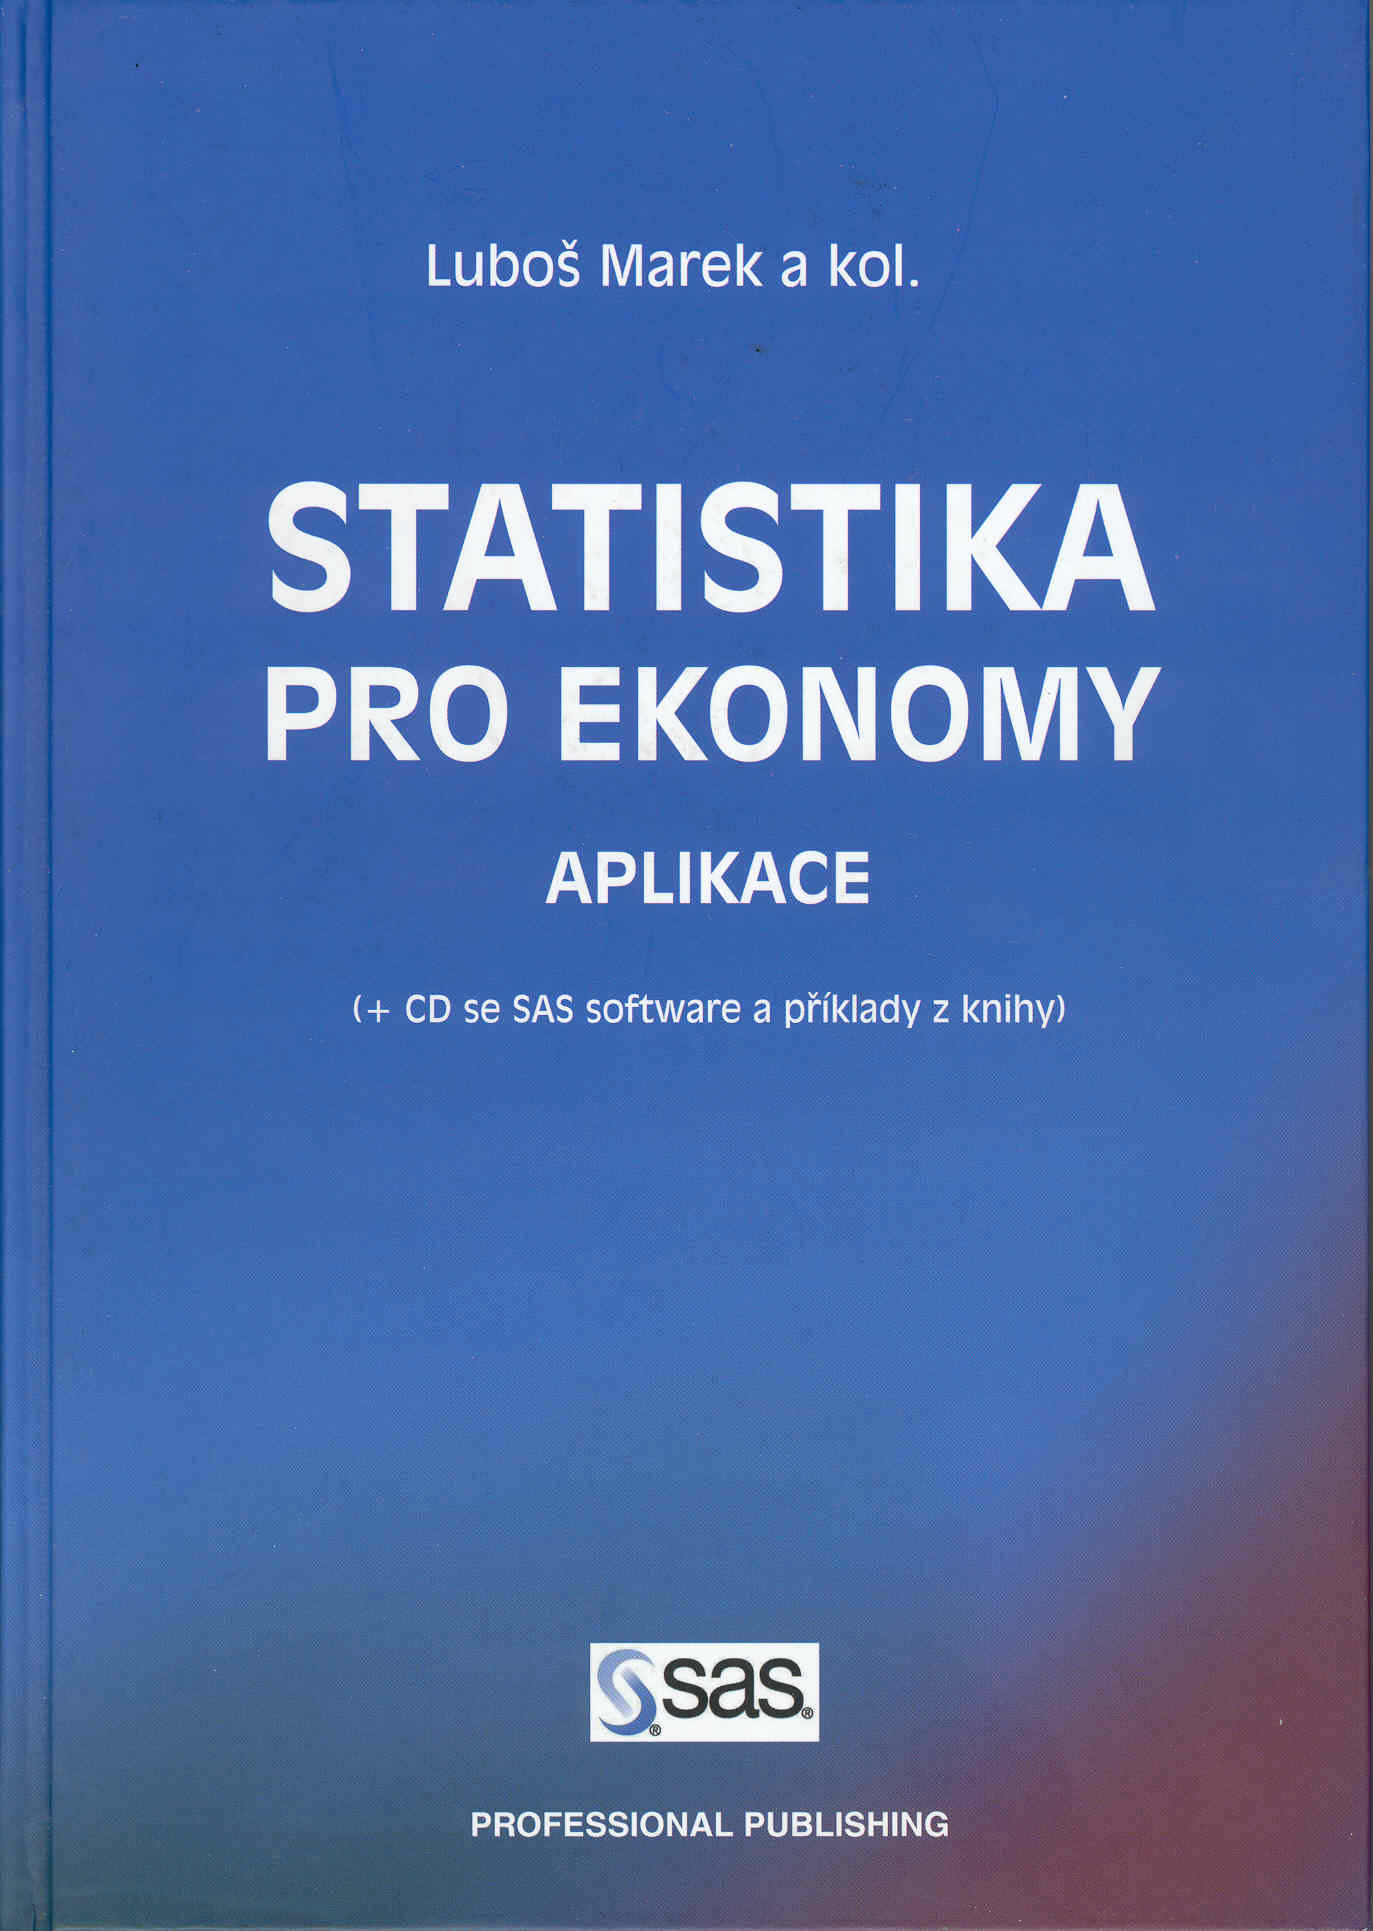 L. Marek a kol.: Statistika pro ekonomy, Aplikace